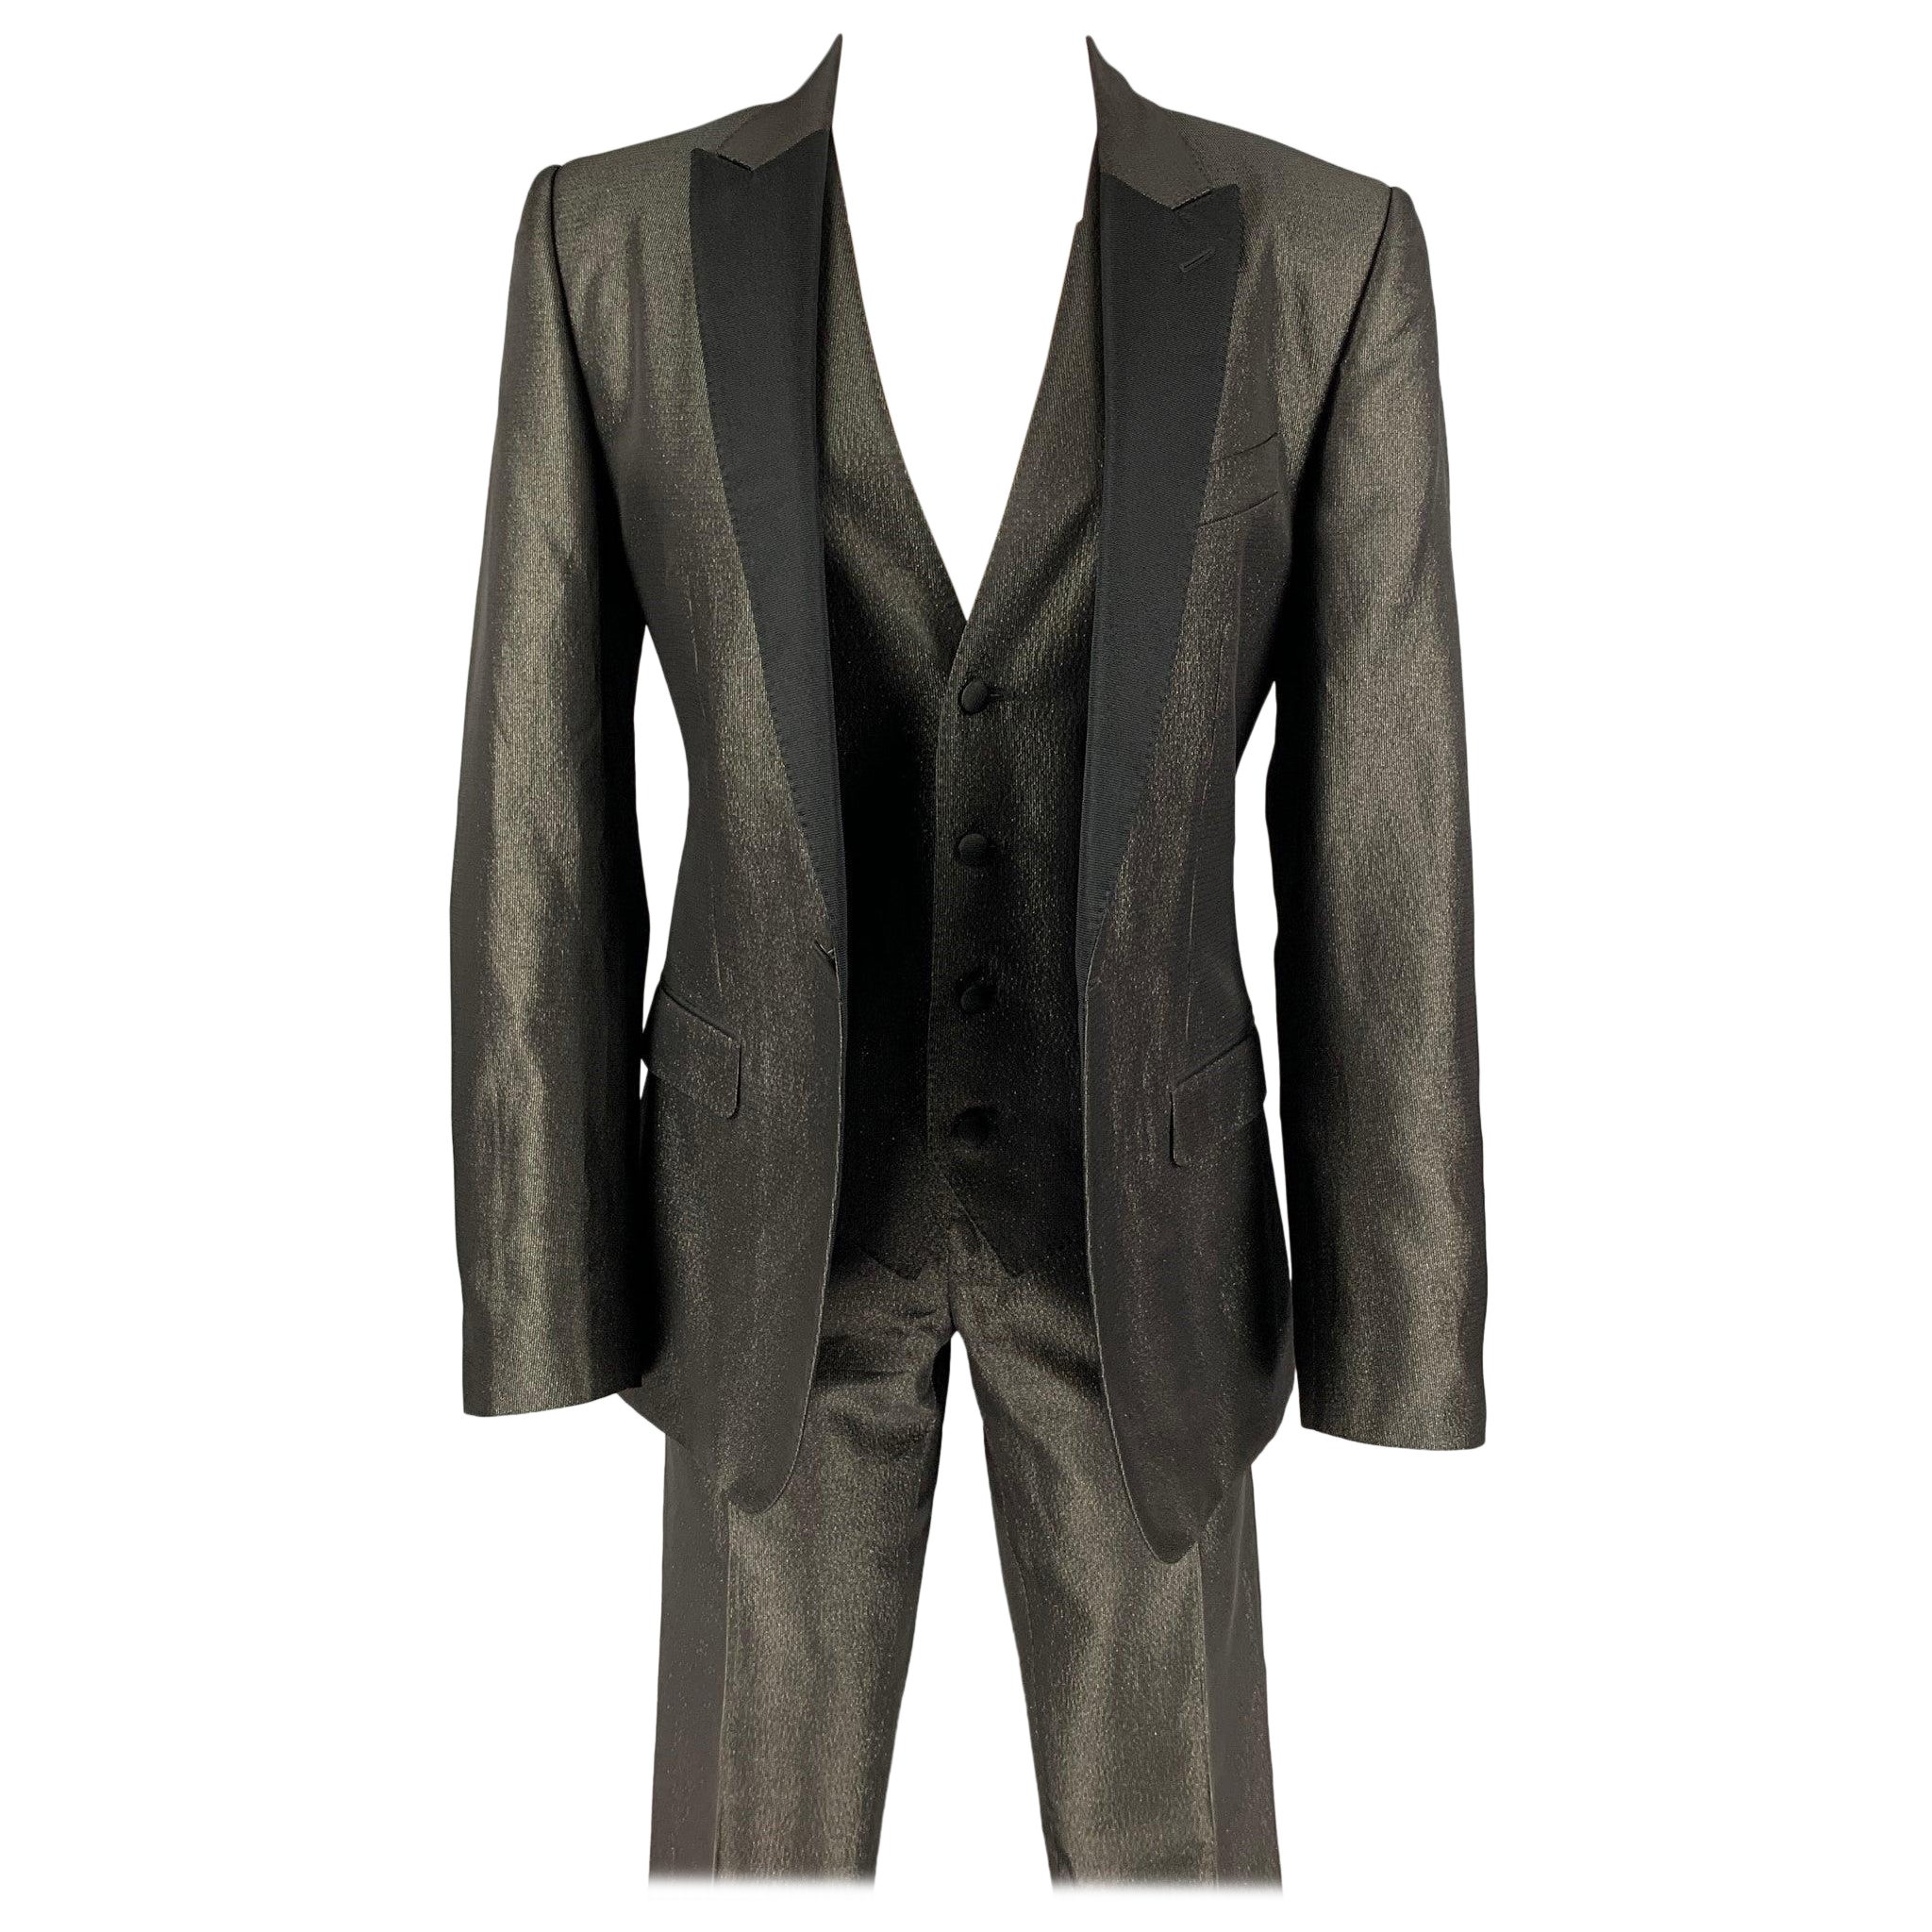 DOLCE & GABBANA Size 36 Black Gold Metallic Acetate Blend 3 Piece Tuxedo Suit For Sale